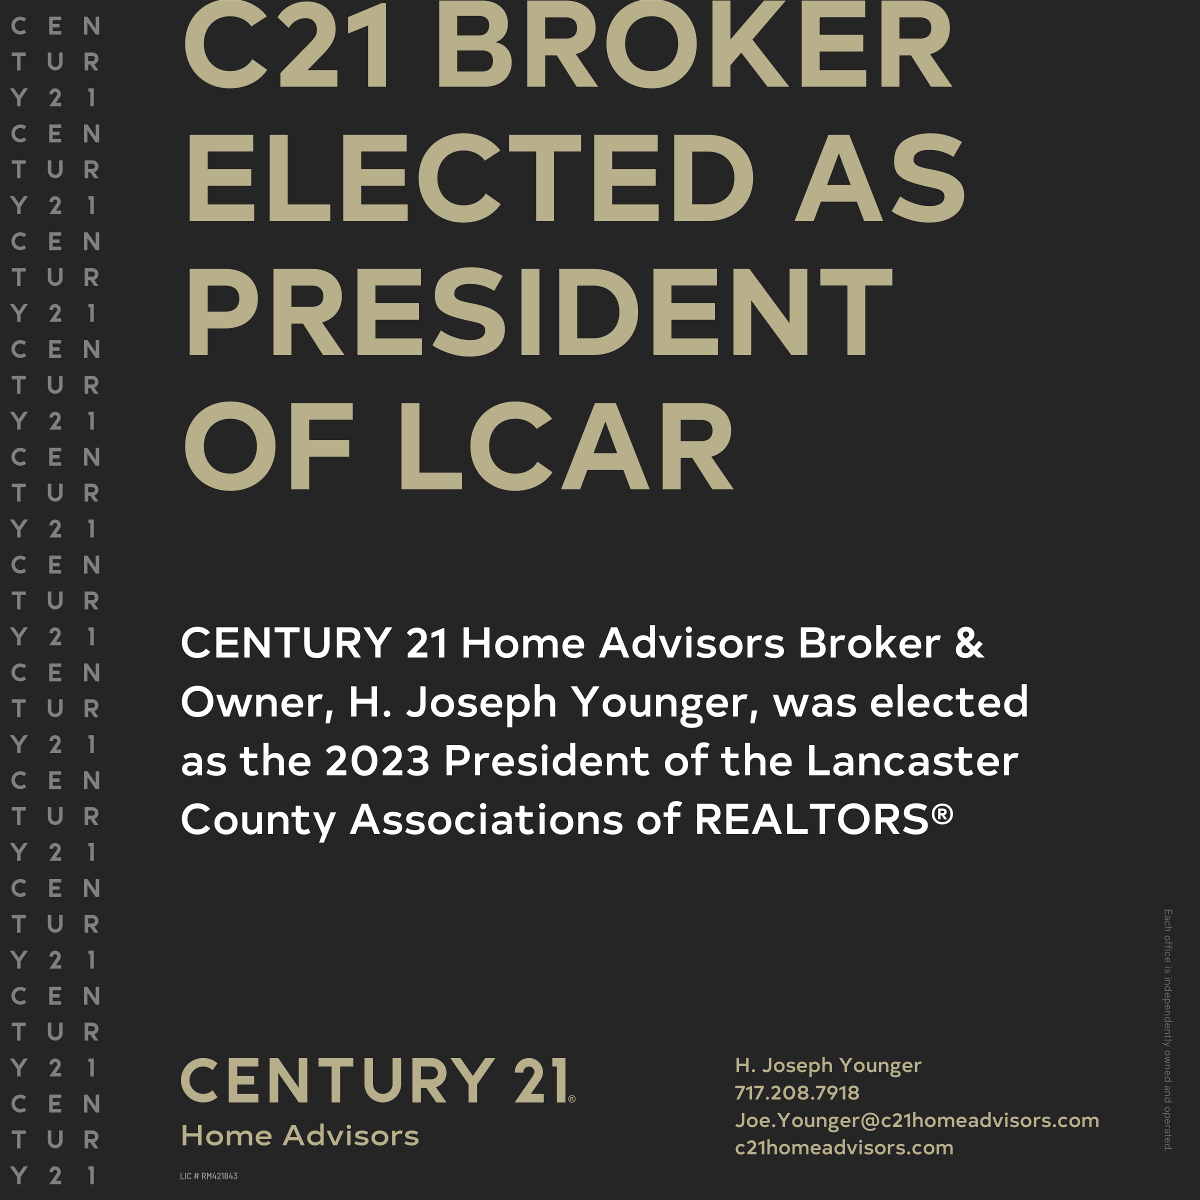 Broker President of LCAR